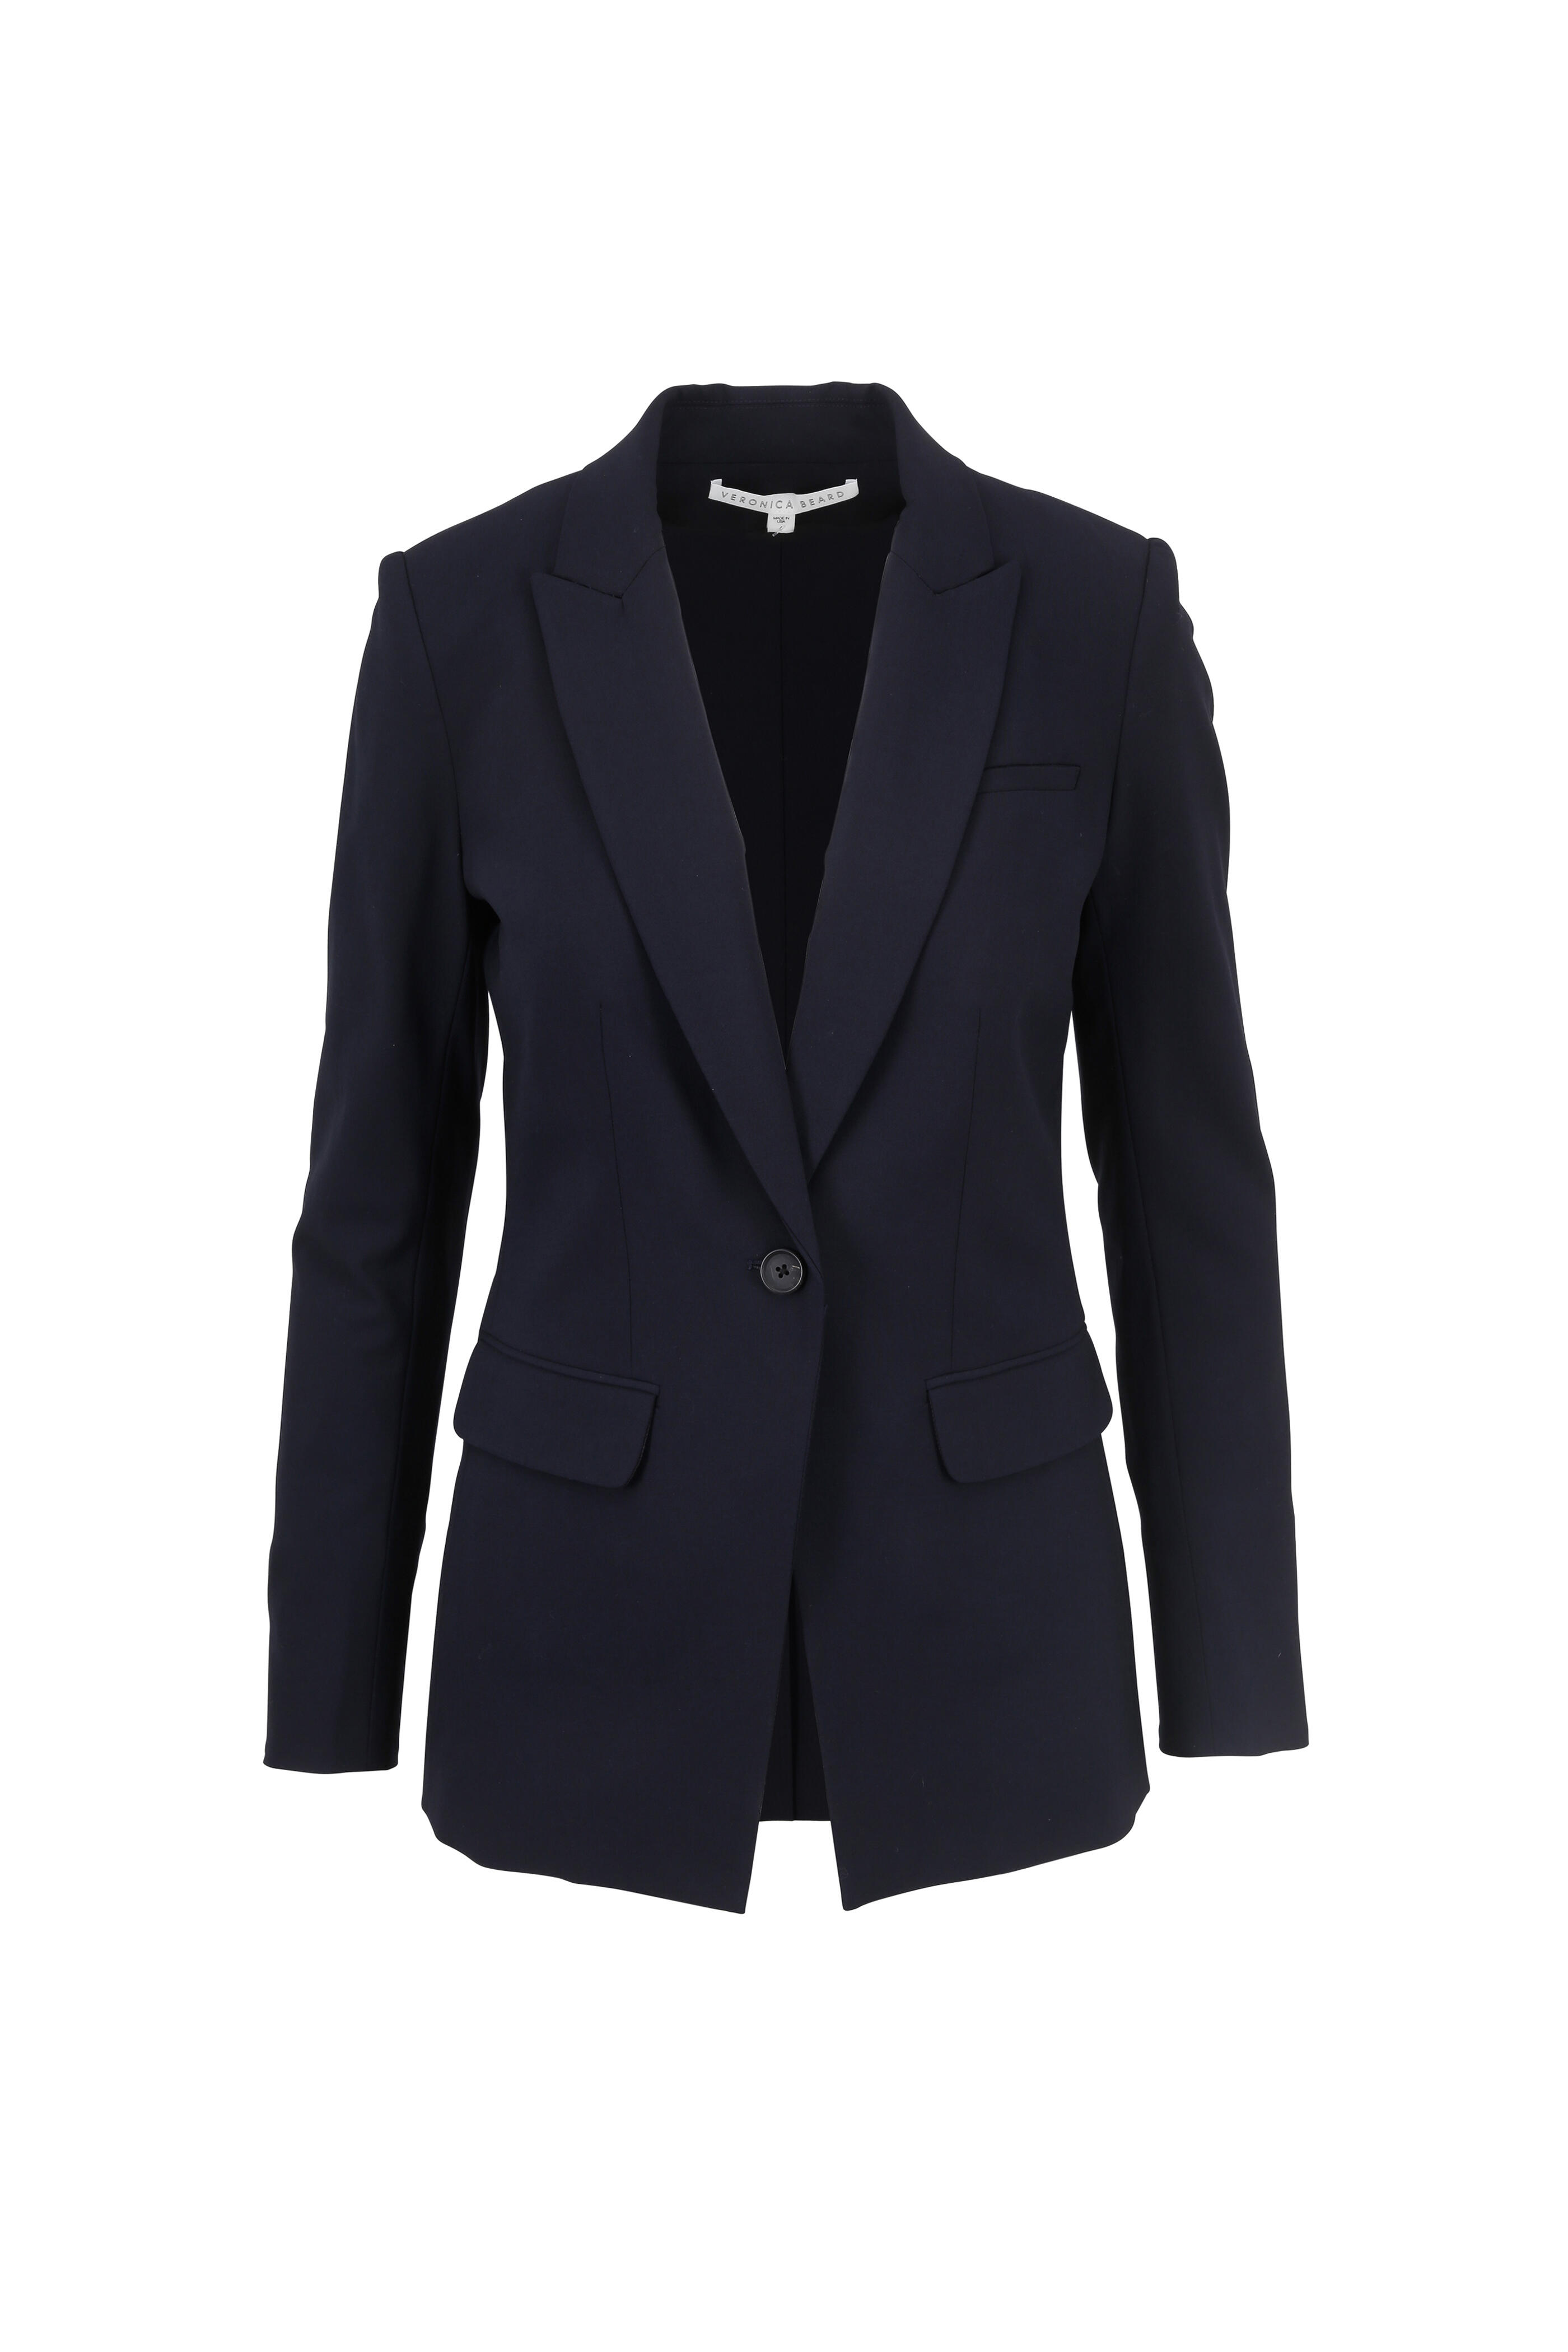 Veronica Beard - Navy Blue Stretch Wool Classic Blazer